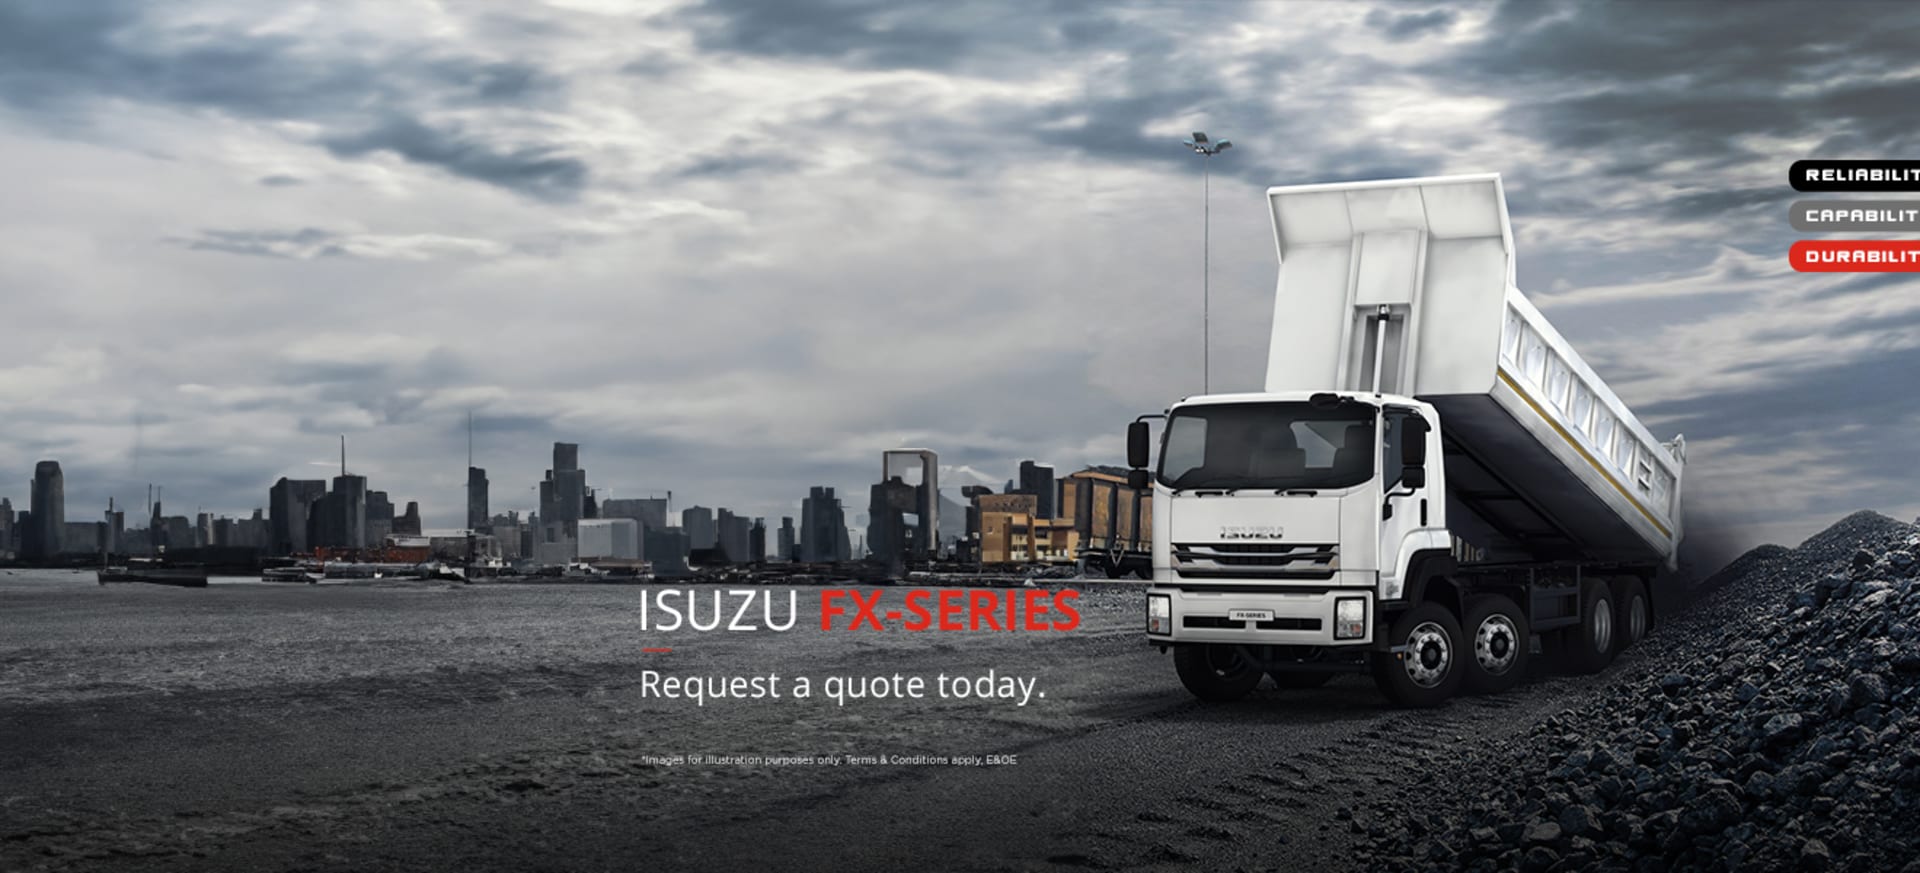 ISUZU FX-Series Trucks